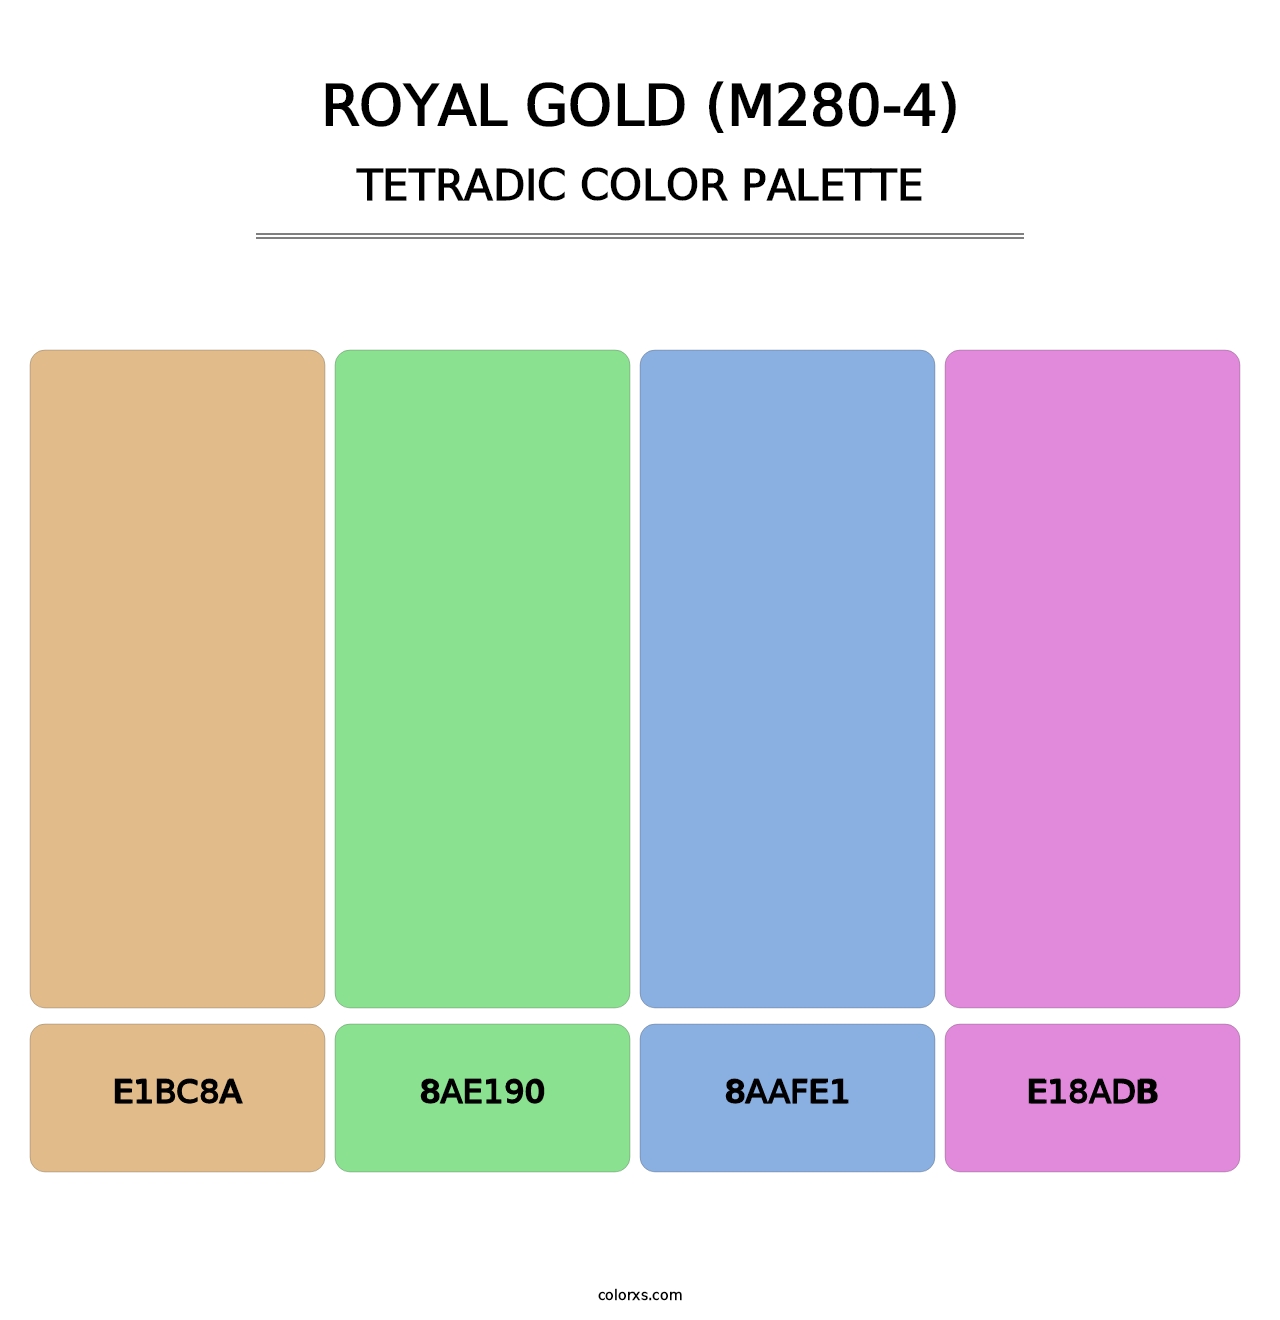 Royal Gold (M280-4) - Tetradic Color Palette